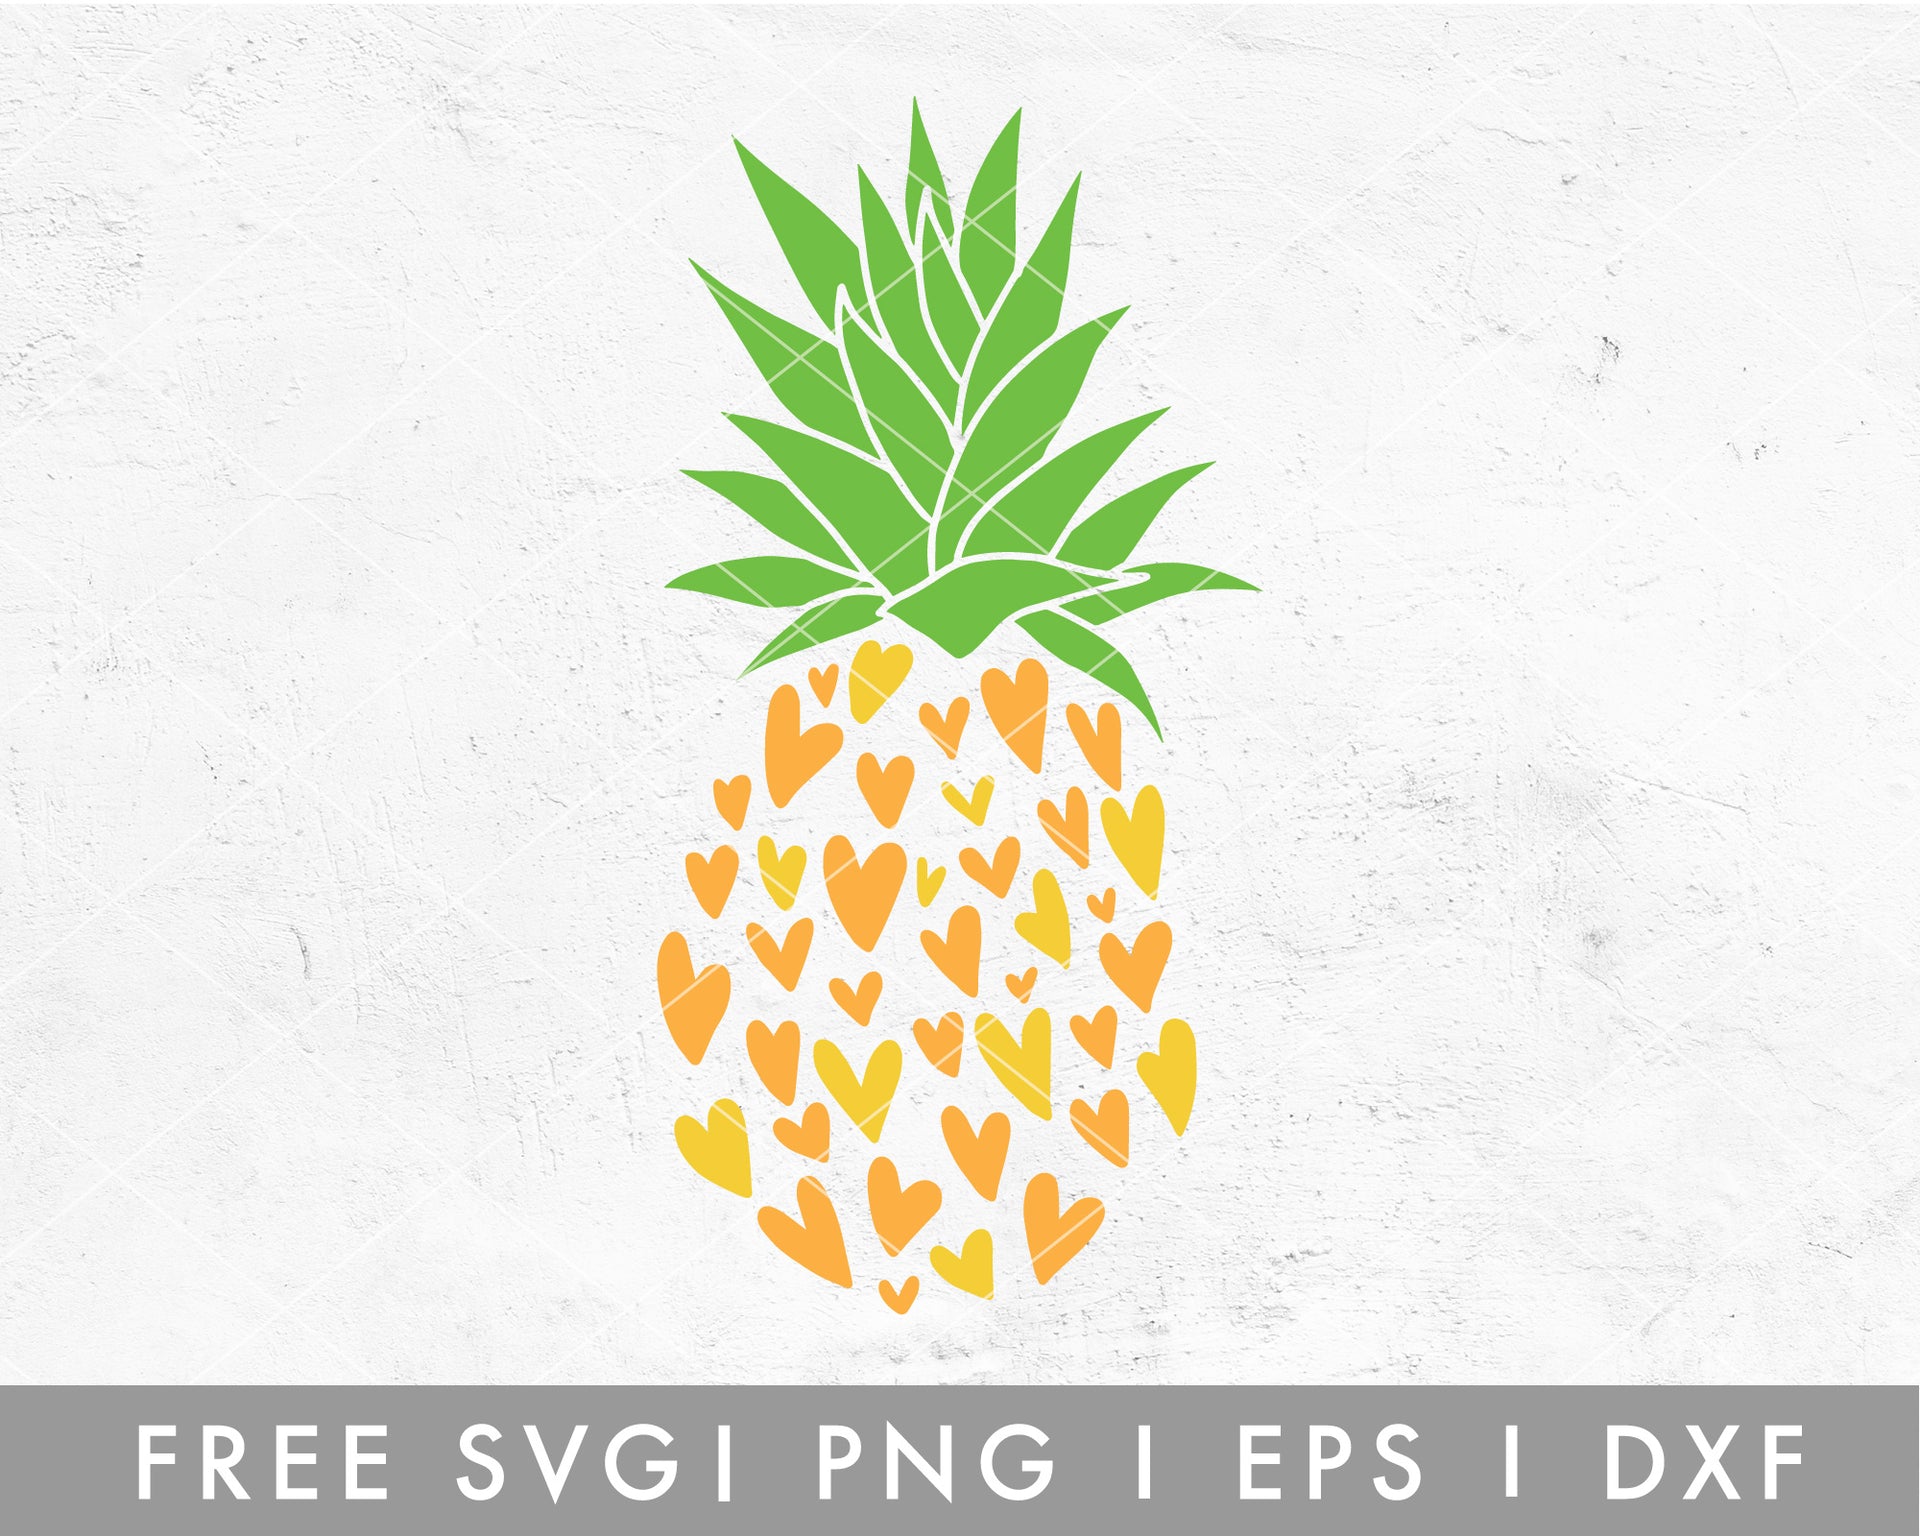 Free Hearts SVG Keychain Pattern - Creative Vector Studio